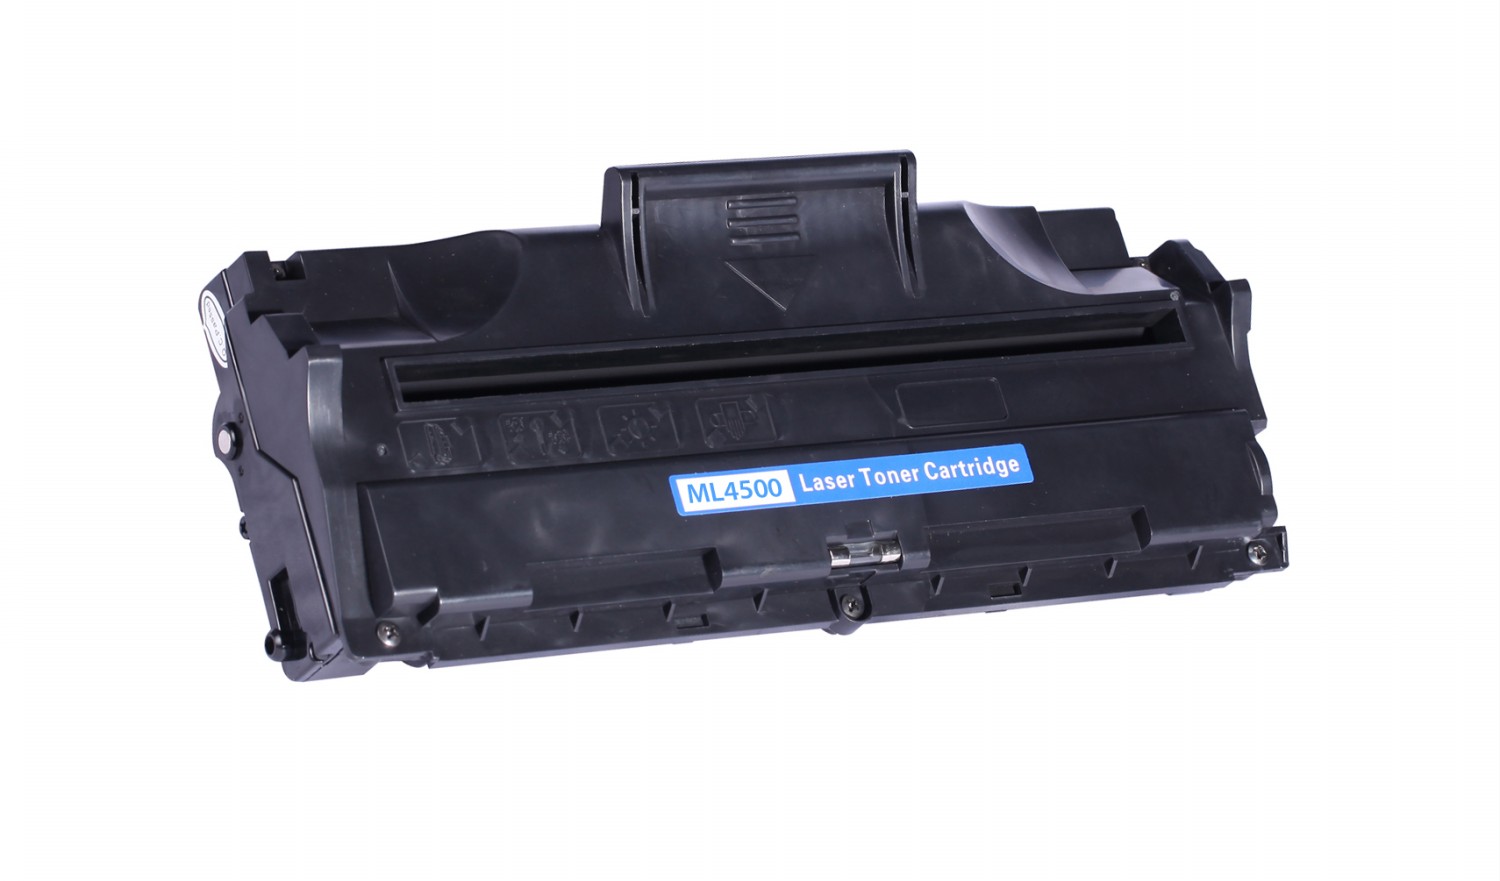 Compatible toner cartridge for Samsung ML4500